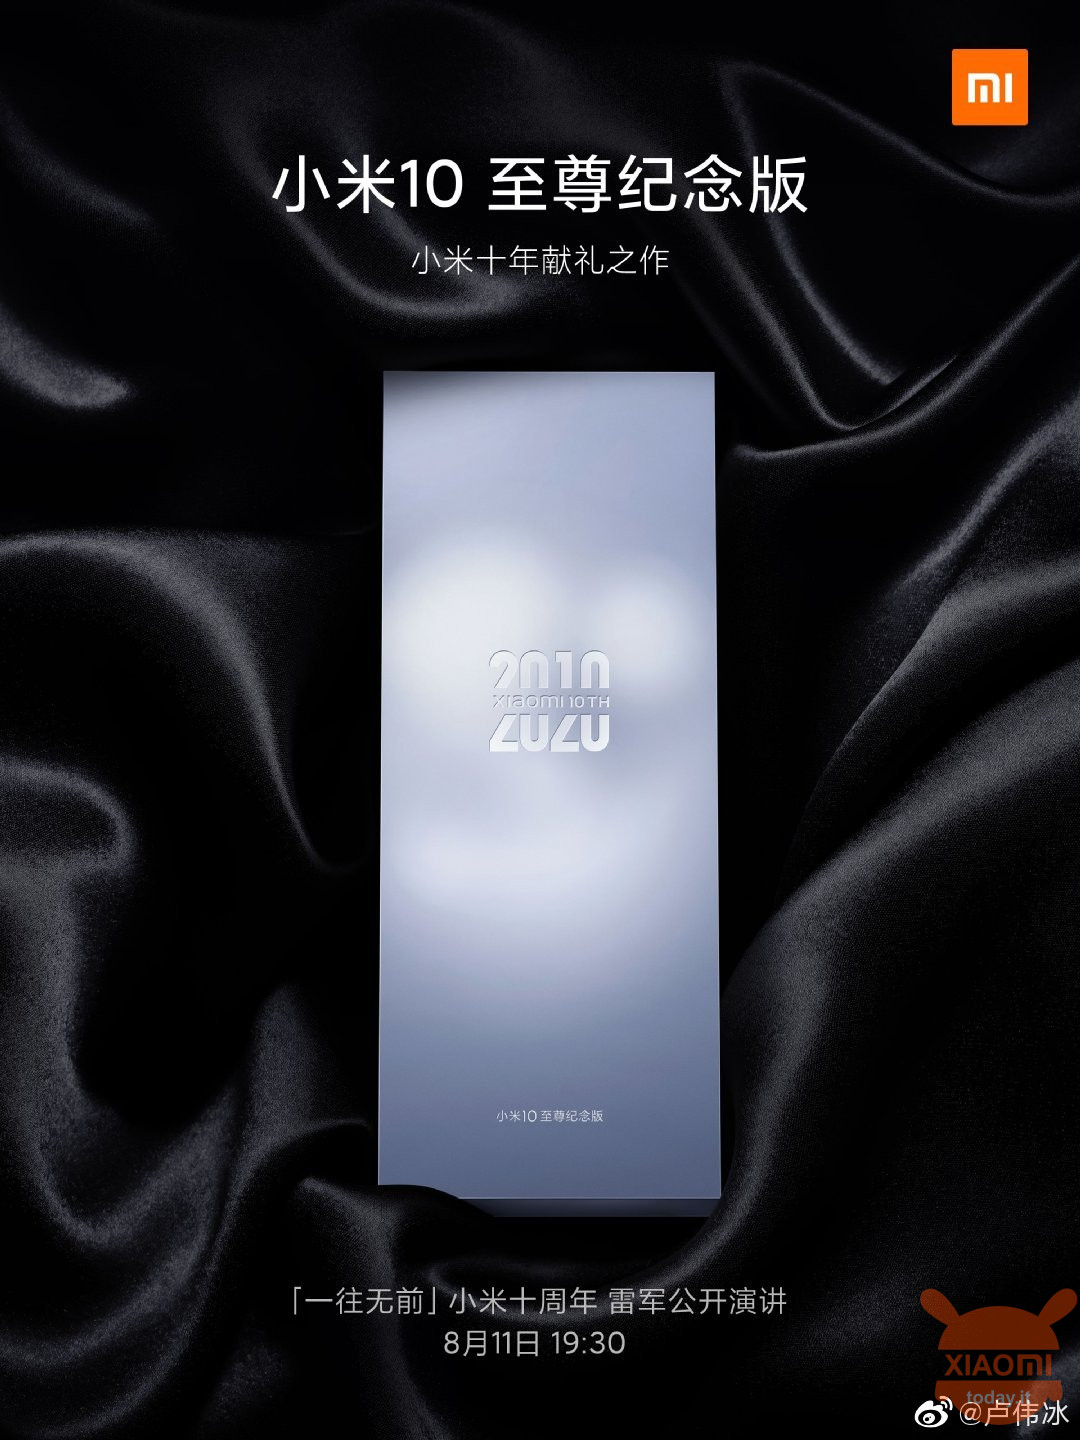 Phiên bản kỷ niệm cực cao của Xiaomi Mi 10